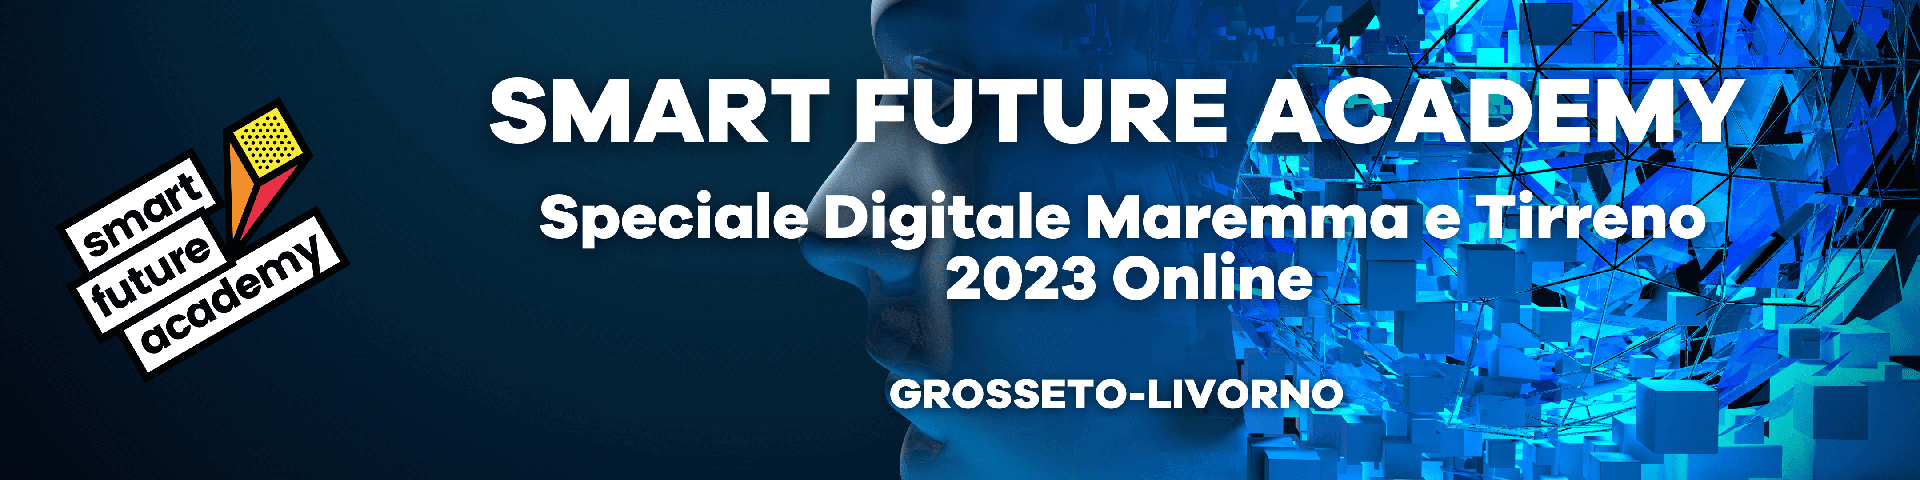 Smart Future Academy Speciale Digitale Maremma e Tirreno 2023 Online